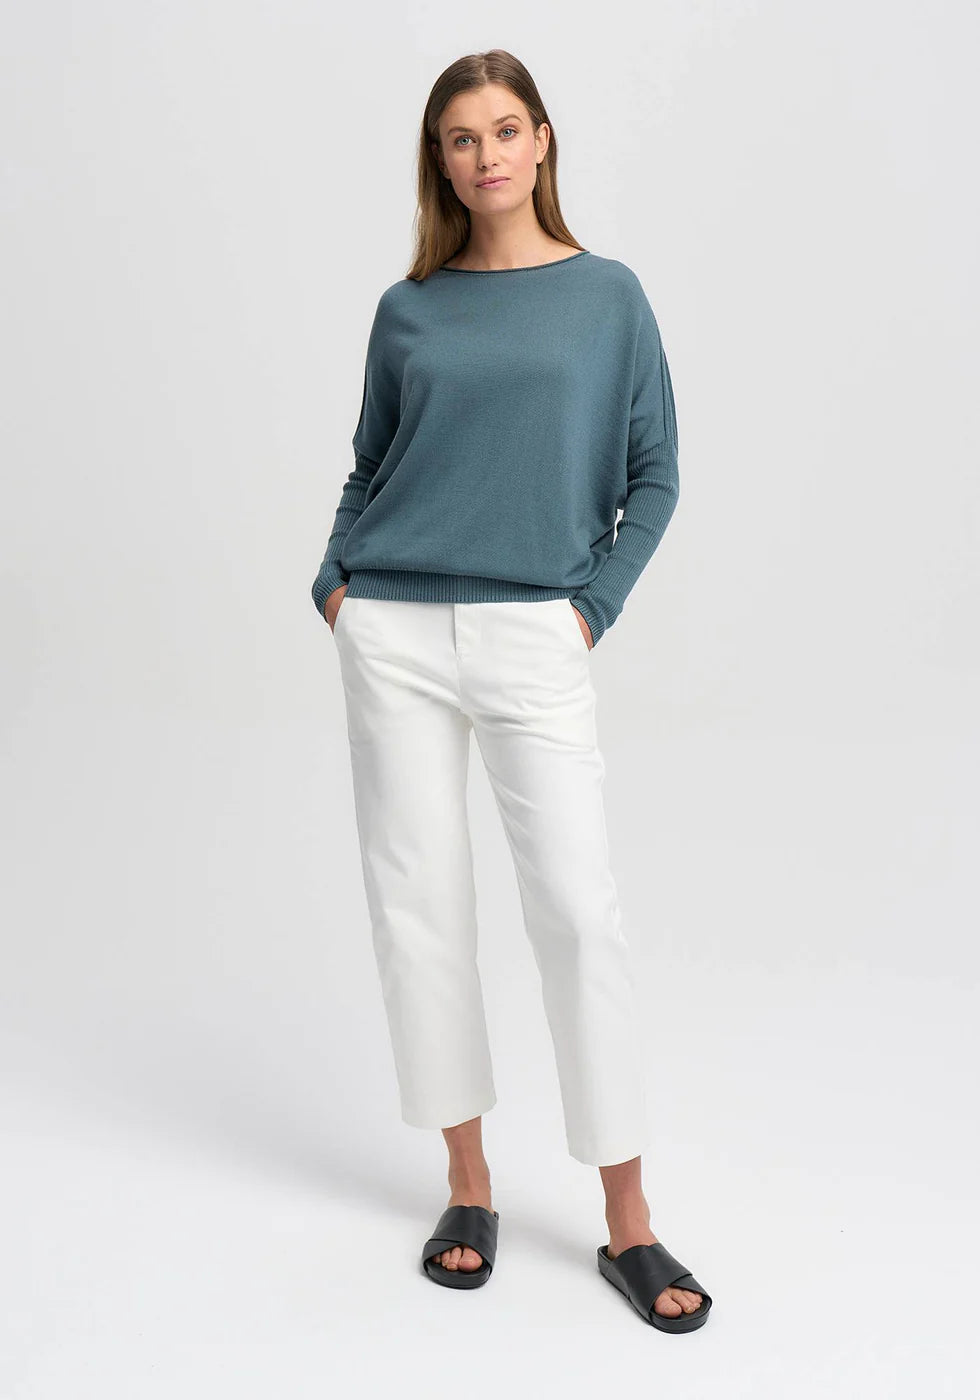 Mira Sweater | Bluestone